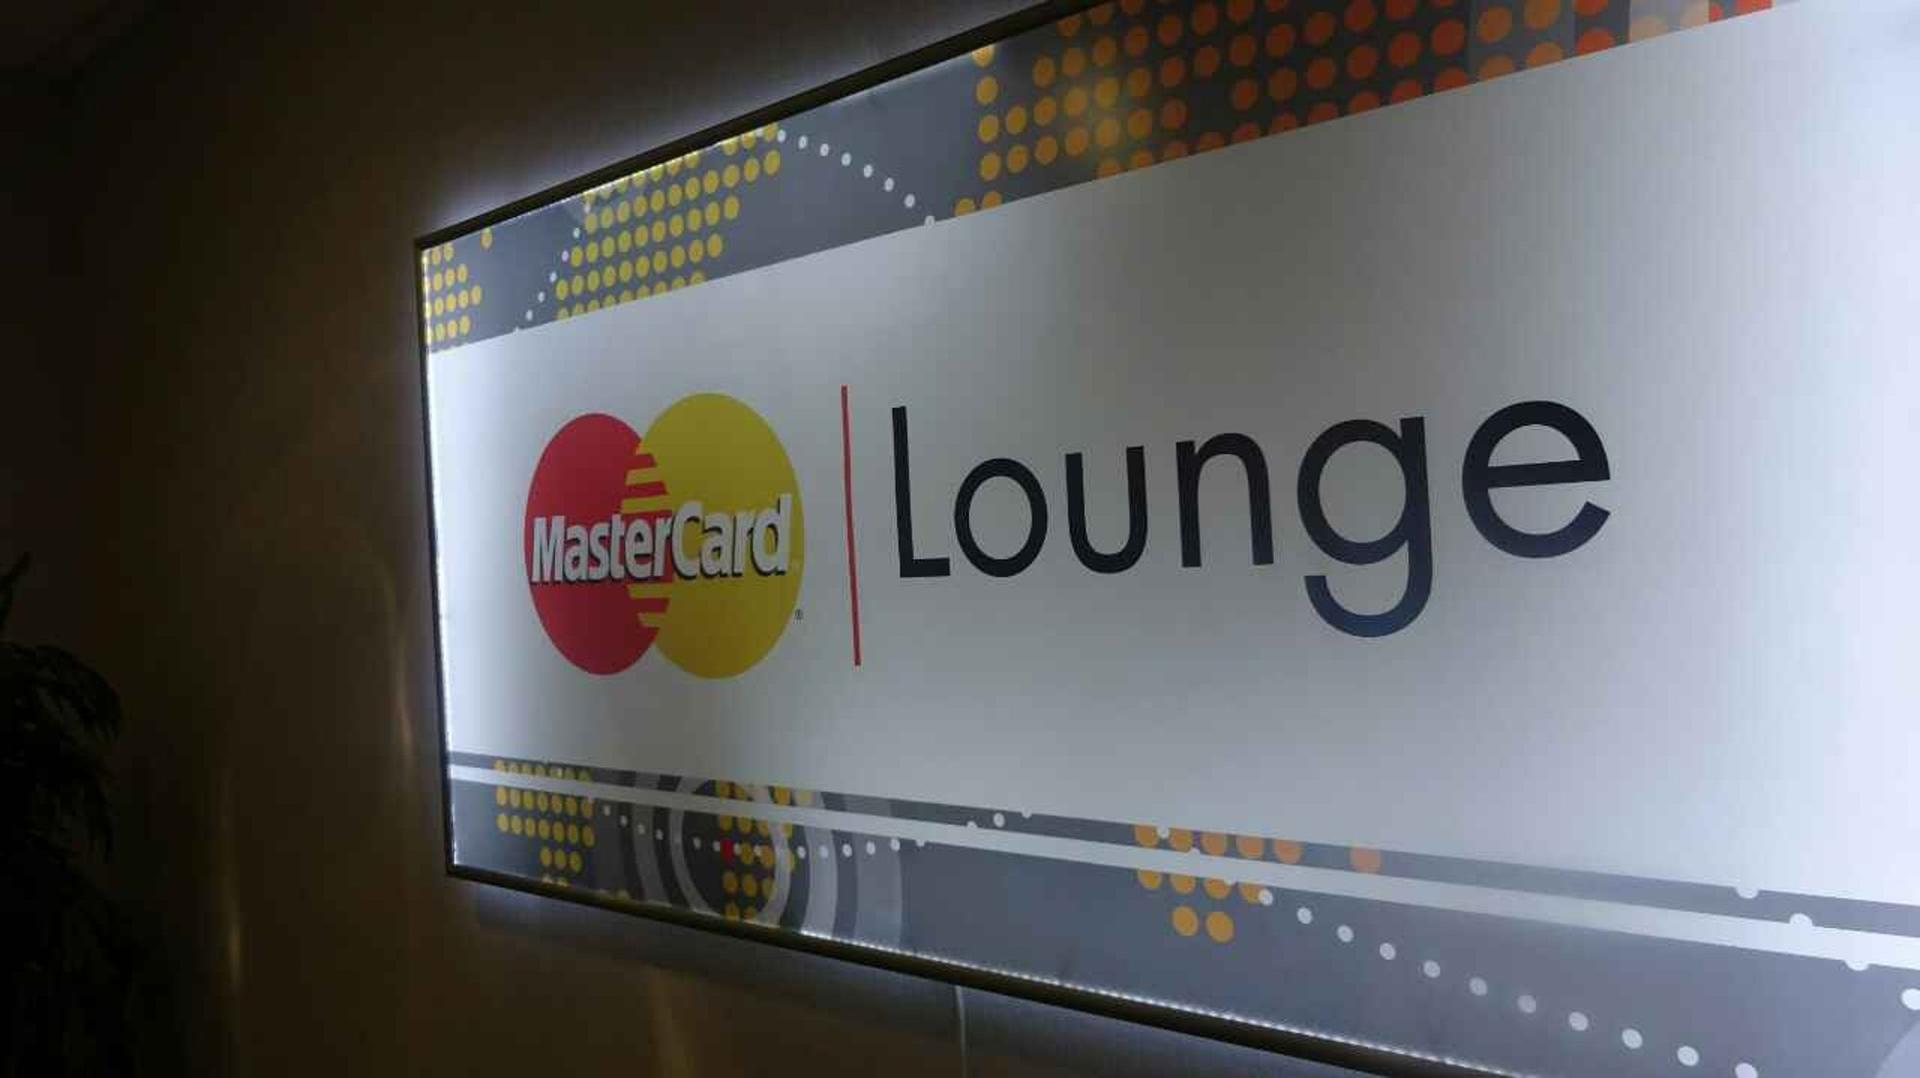 Mastercard Business Lounge image 9 of 36